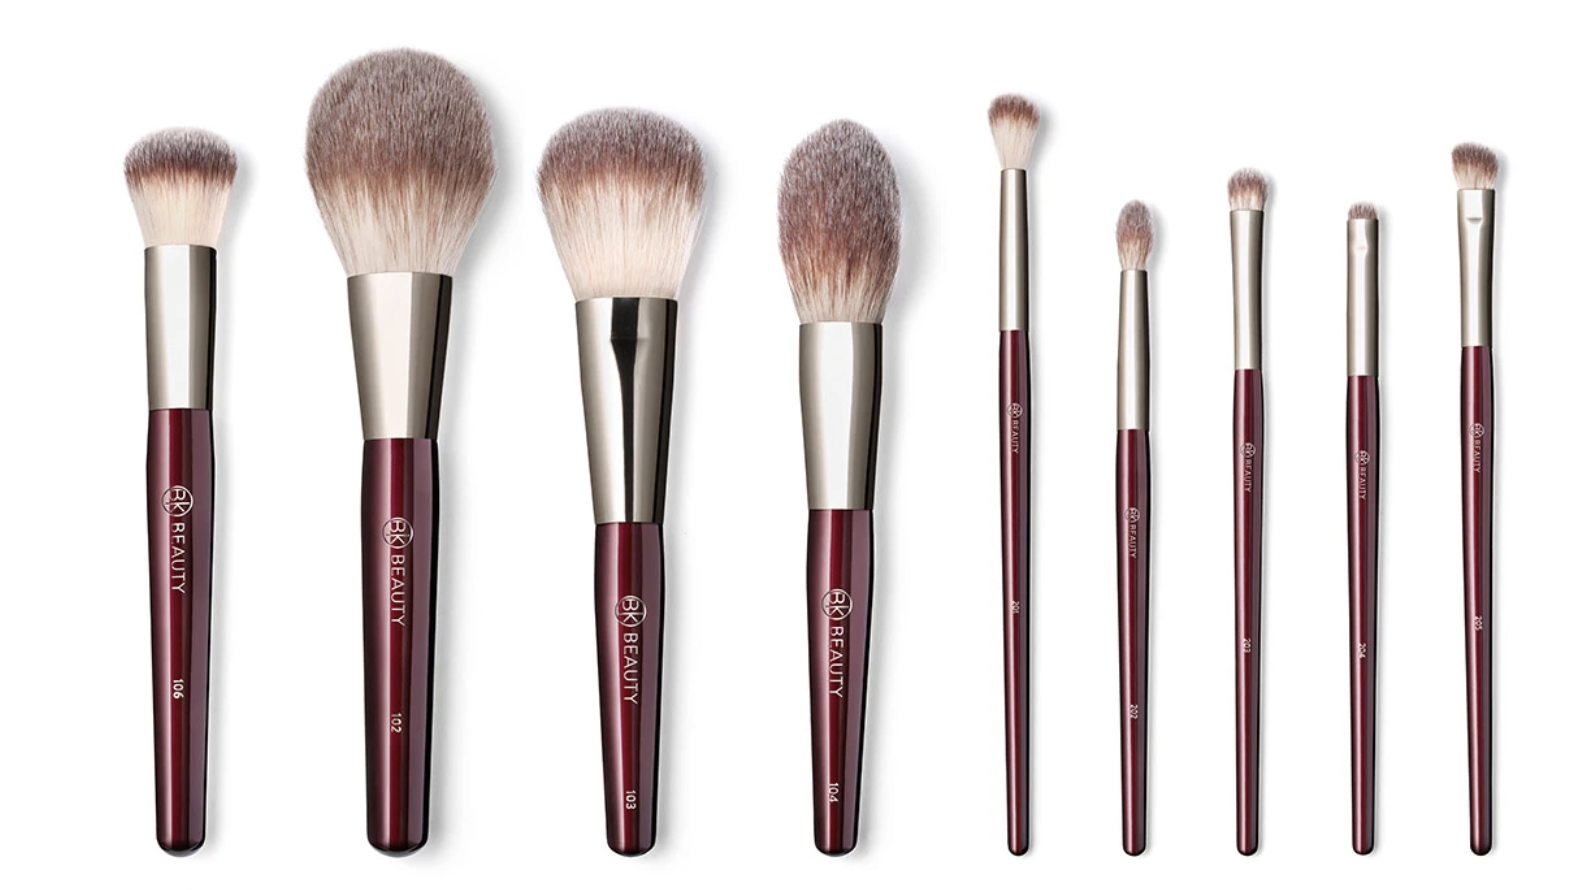 BK Beauty makeup brushes